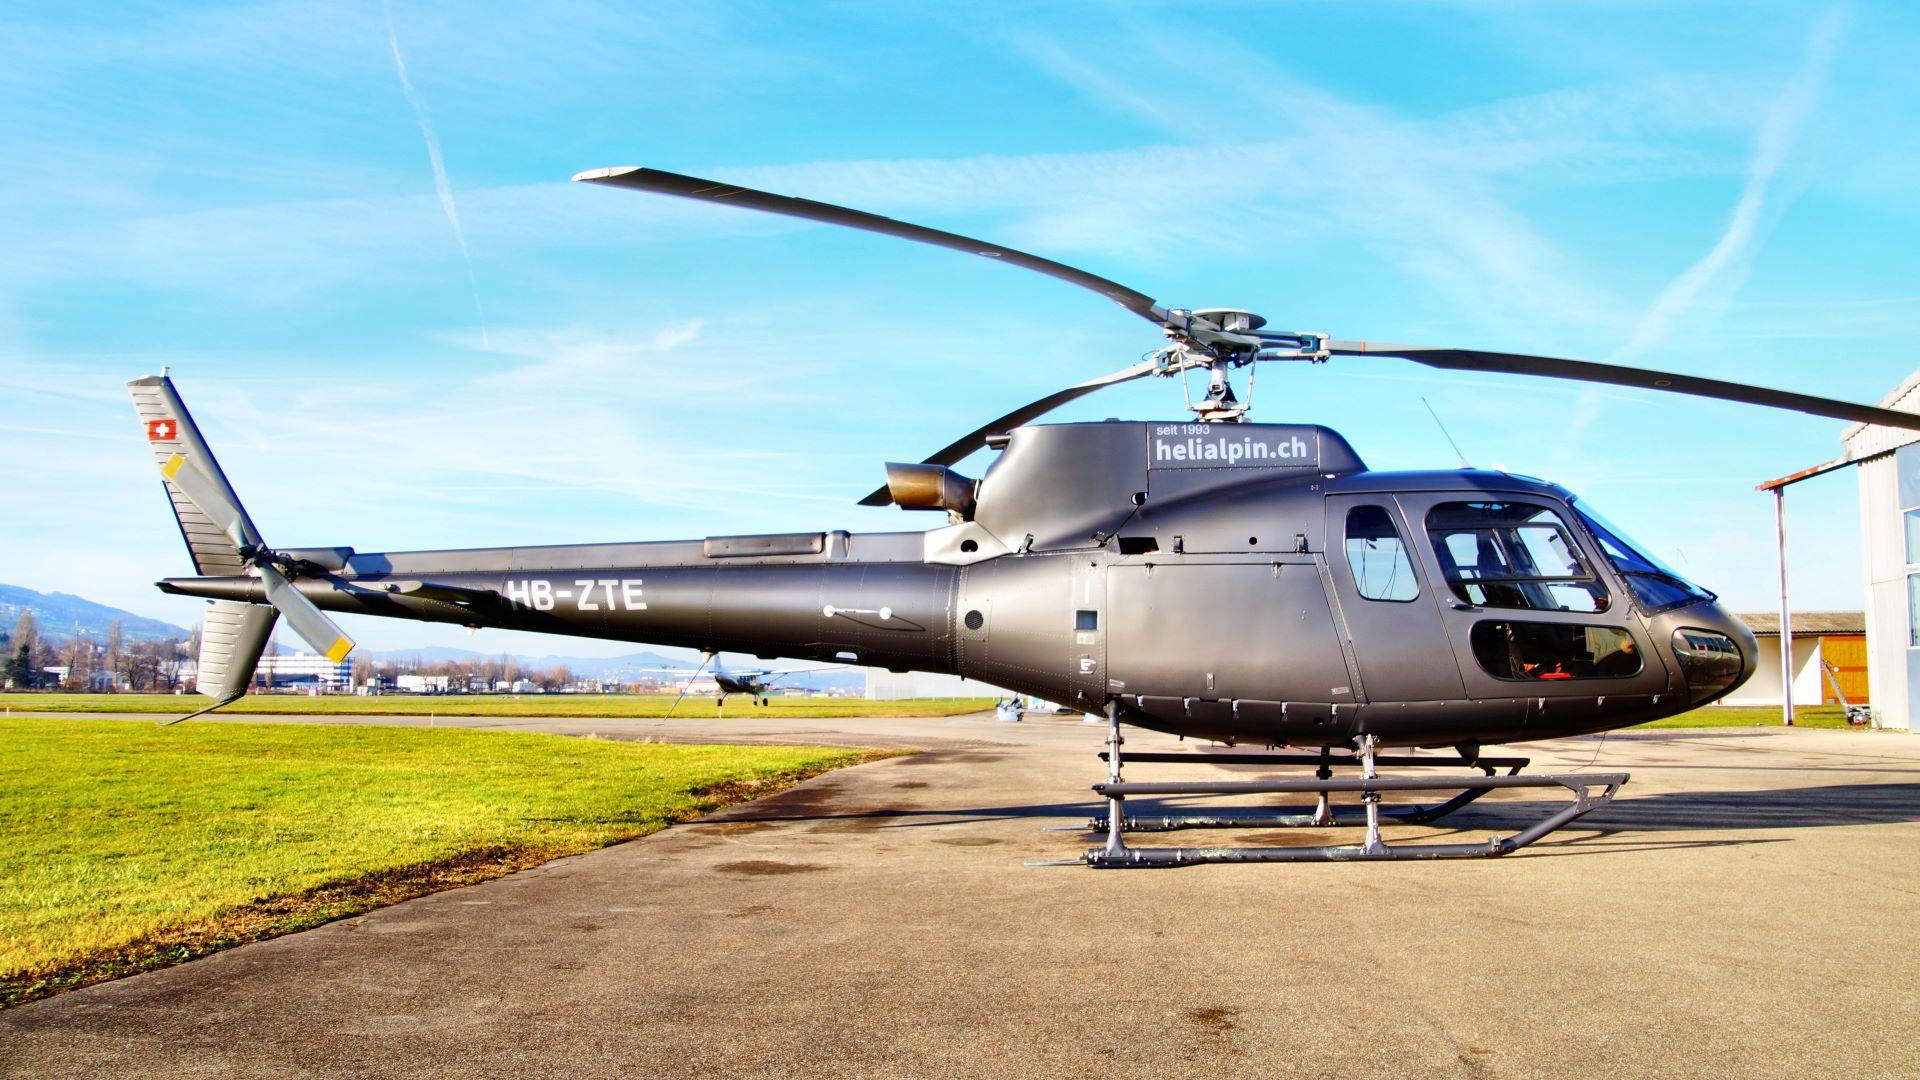 Helikopter Modell HB-ZTE seitlich